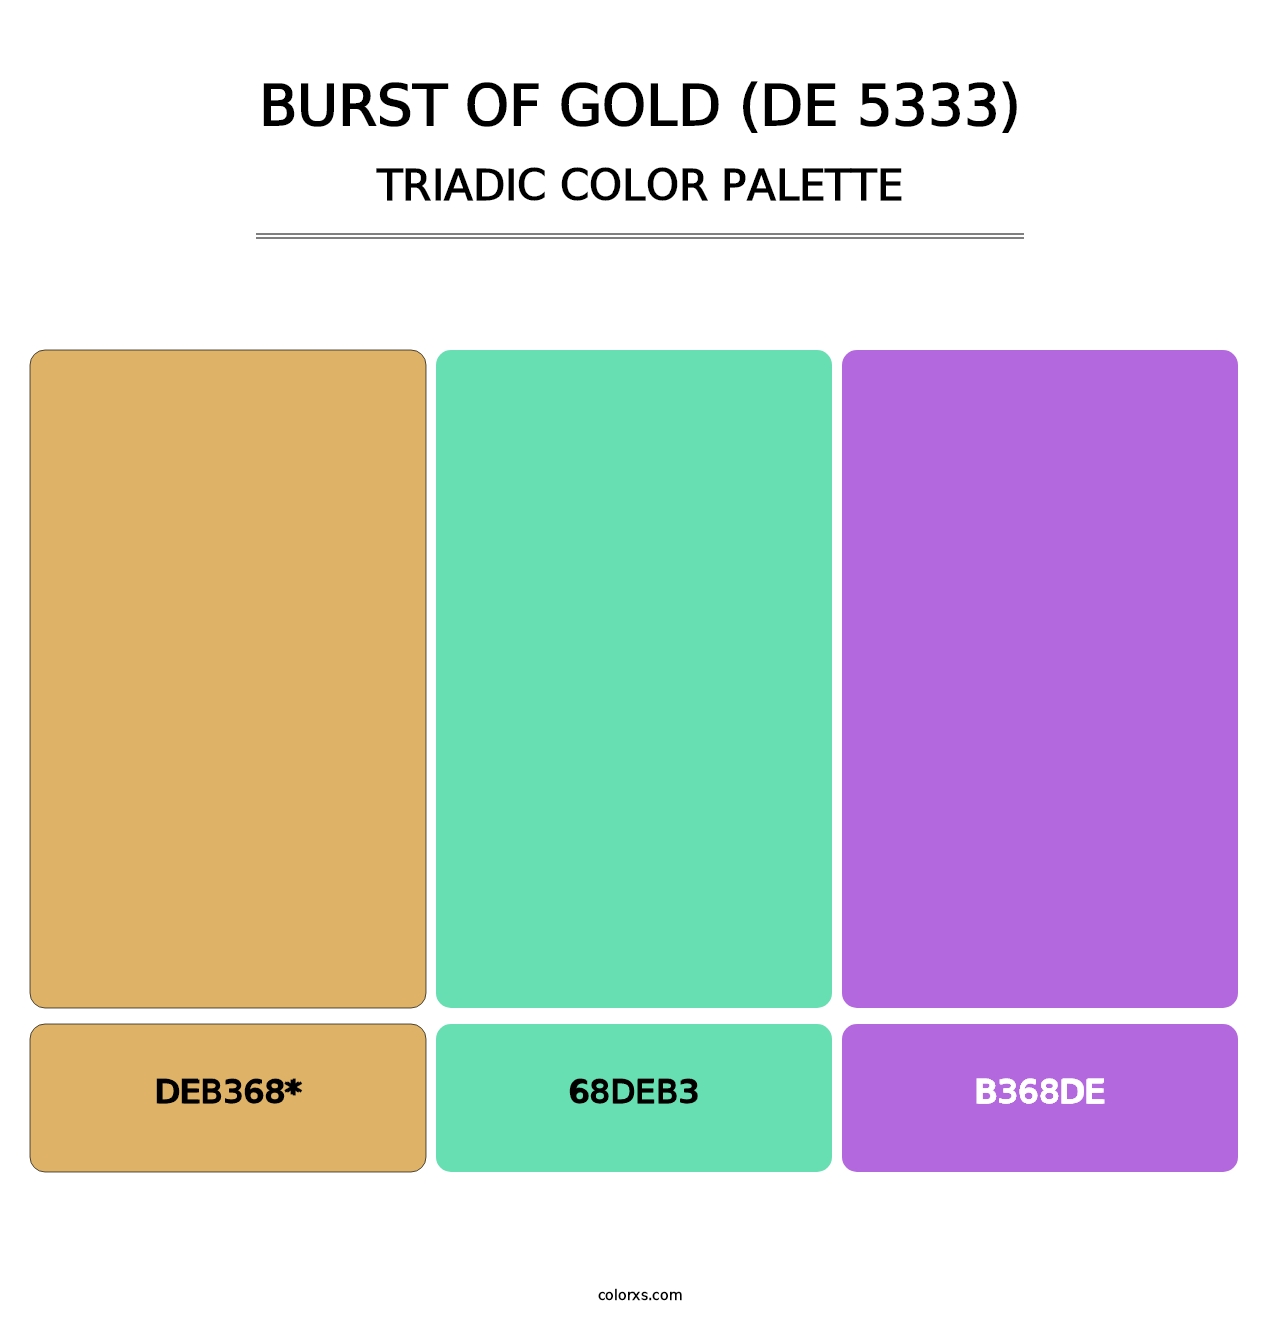 Burst of Gold (DE 5333) - Triadic Color Palette